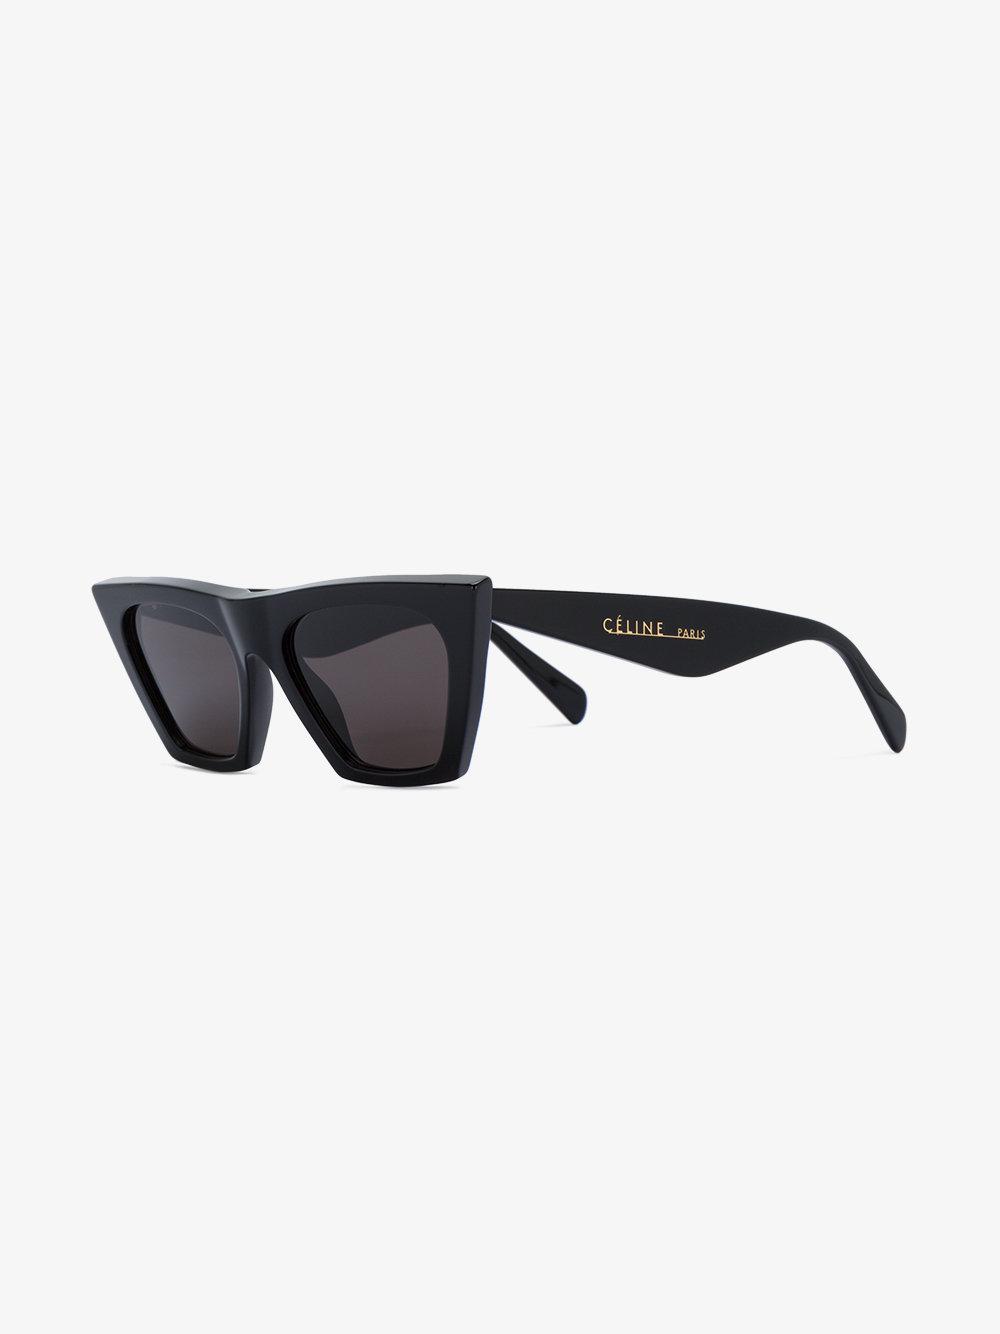 Celine Edge Sunglasses Black Best Sale, SAVE 31% - lutheranems.com